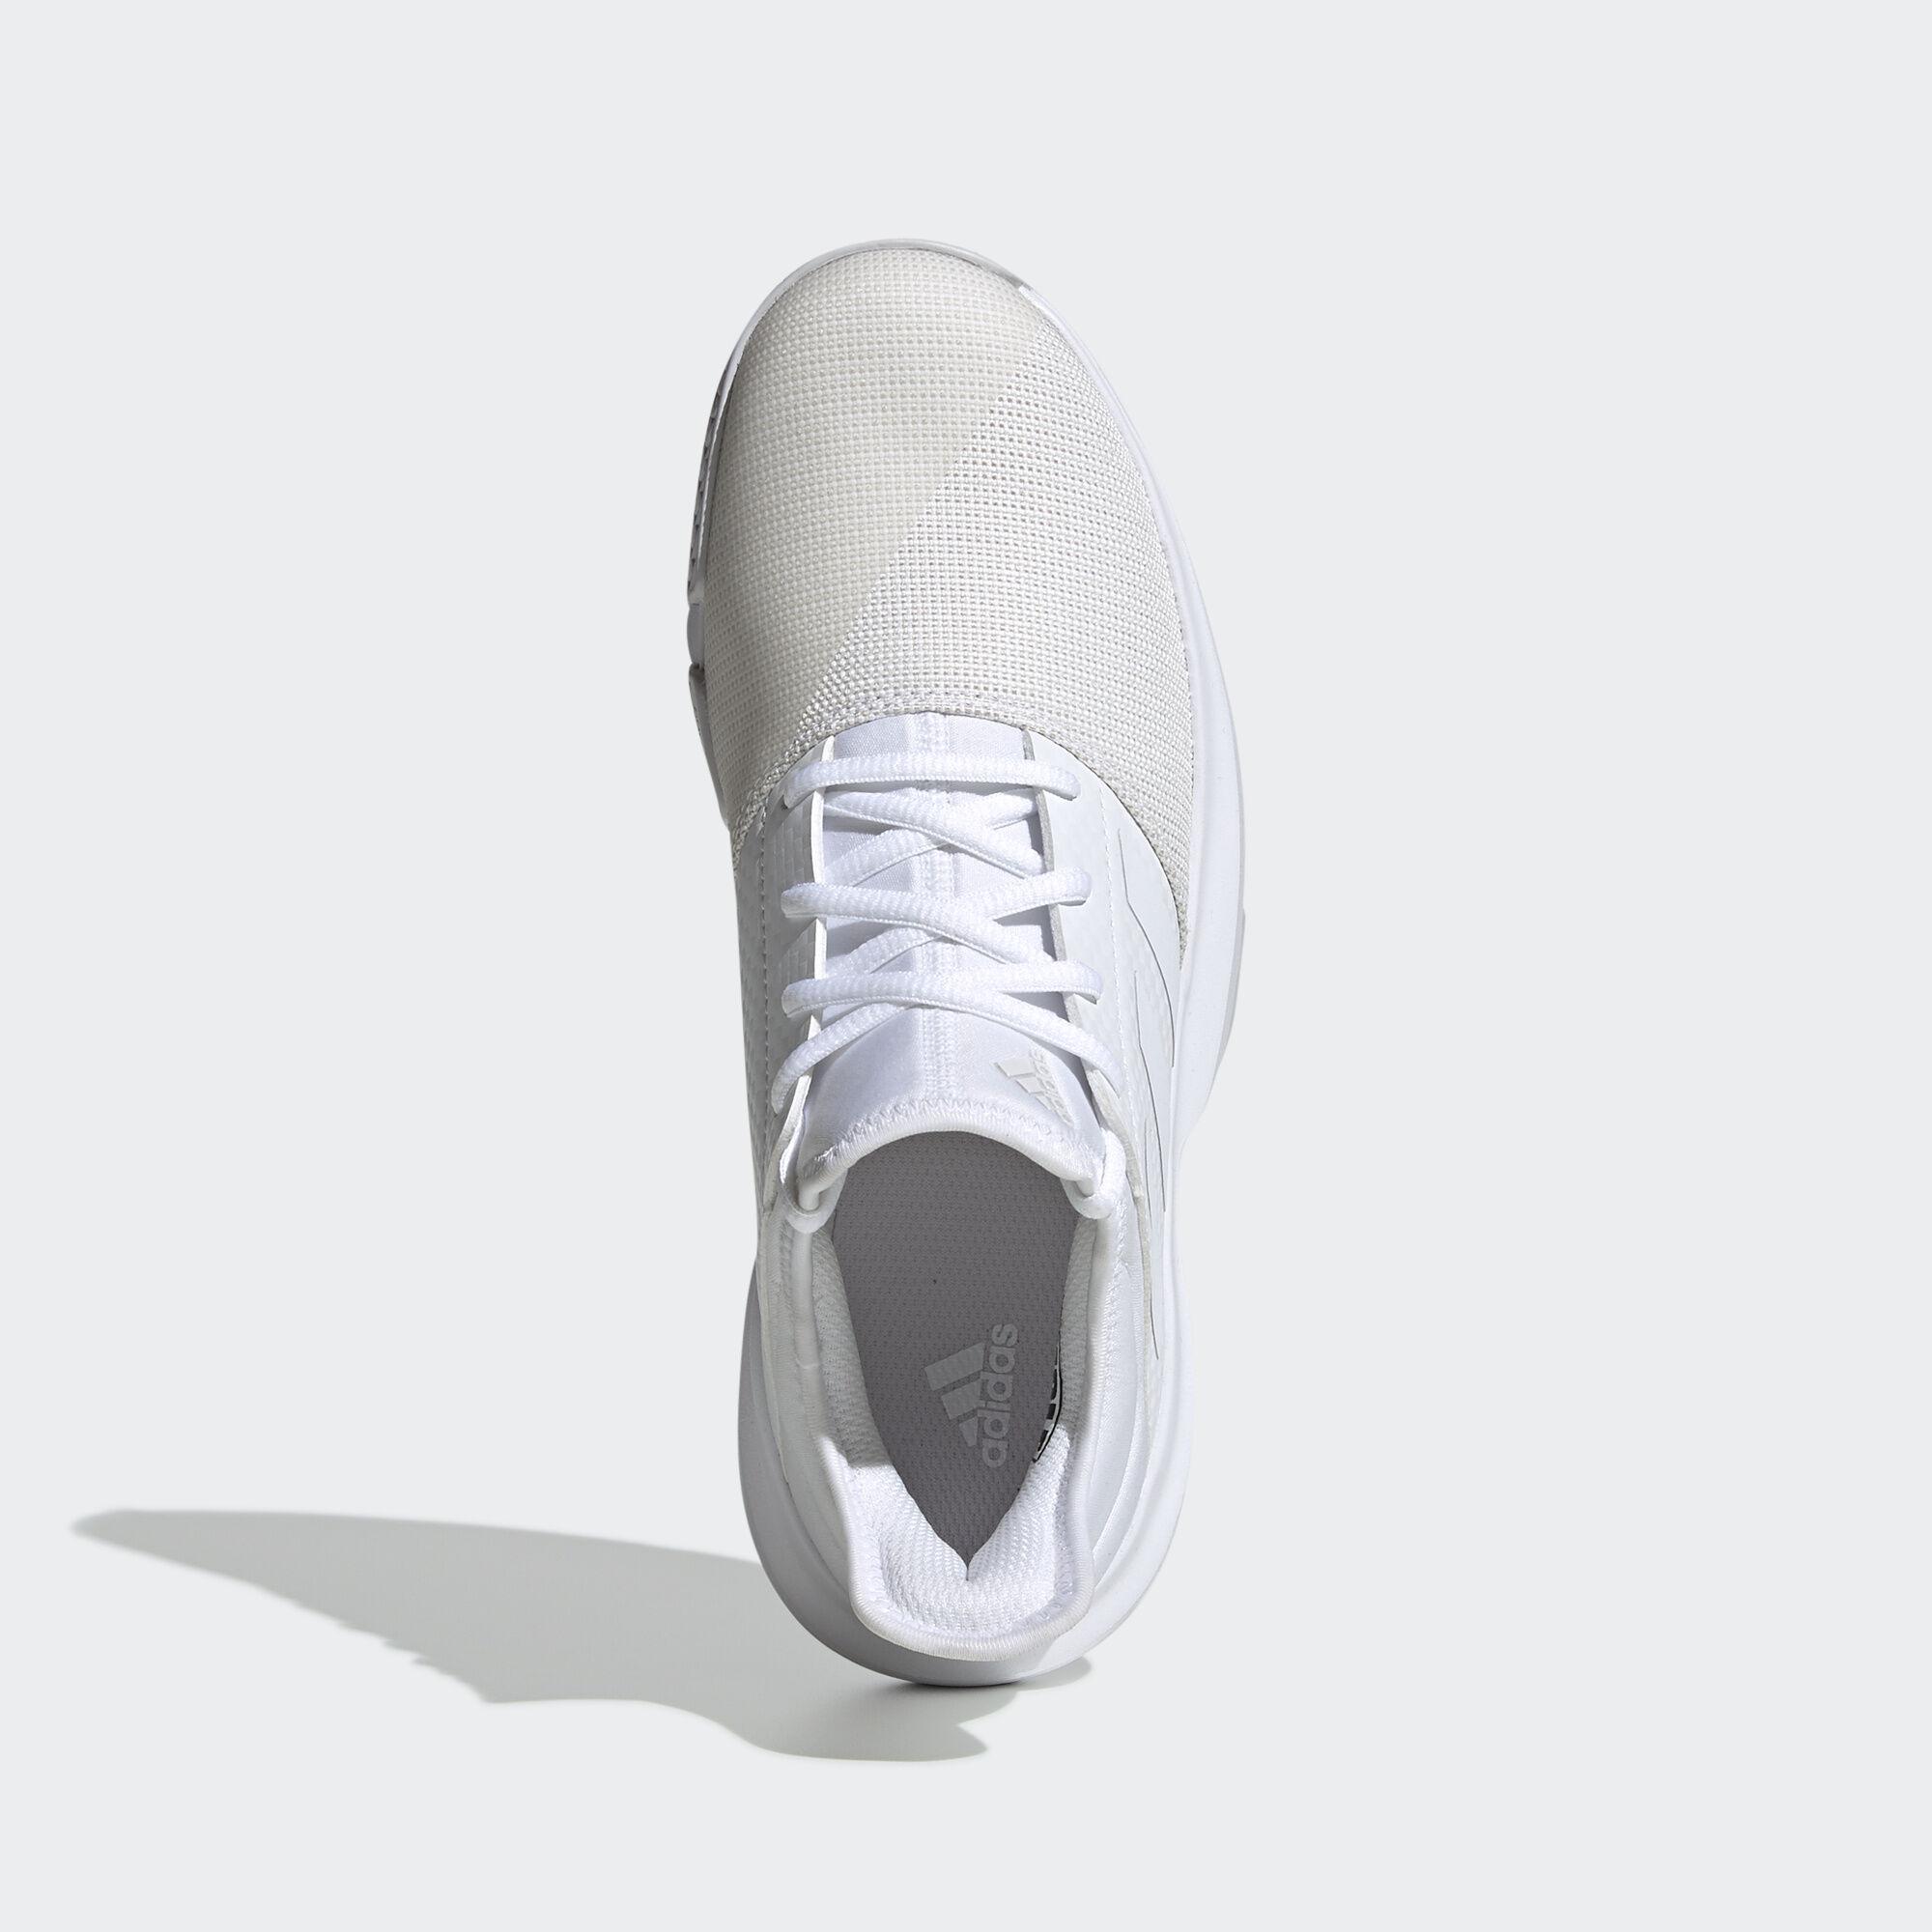 Adidas Womens GameCourt Tennis Shoes - White/Grey - Tennisnuts.com